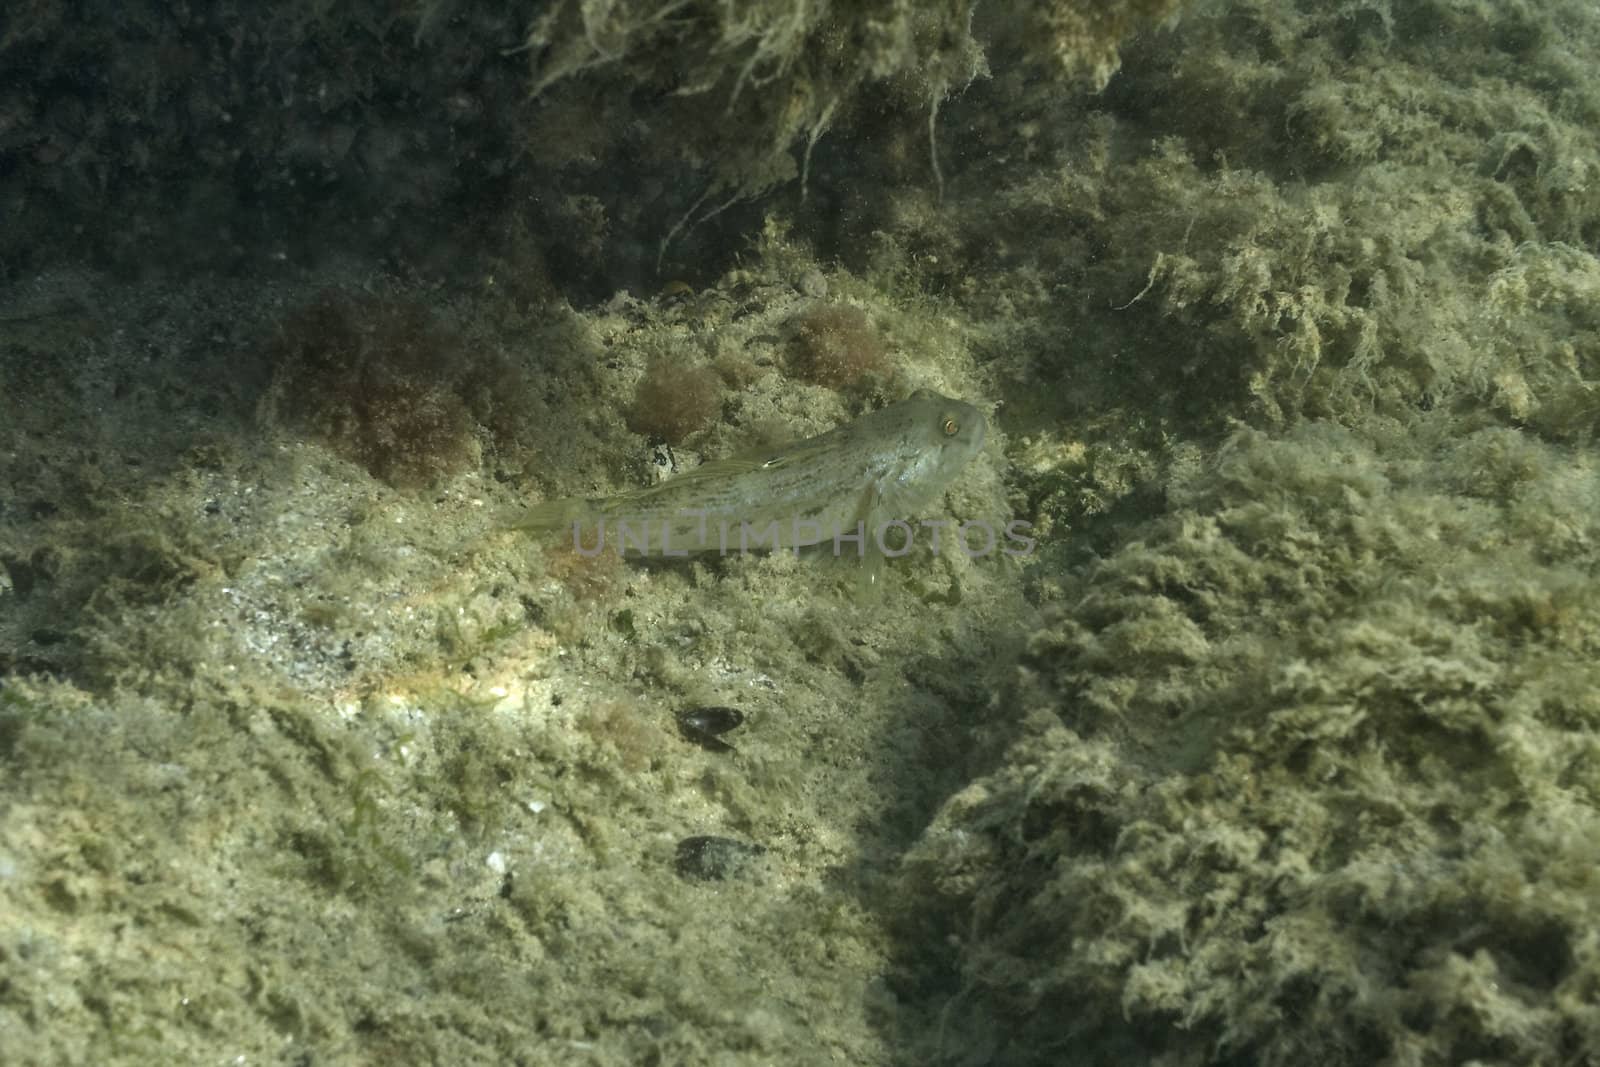 Underwater rock overgrown sea slime. Underwater photography.